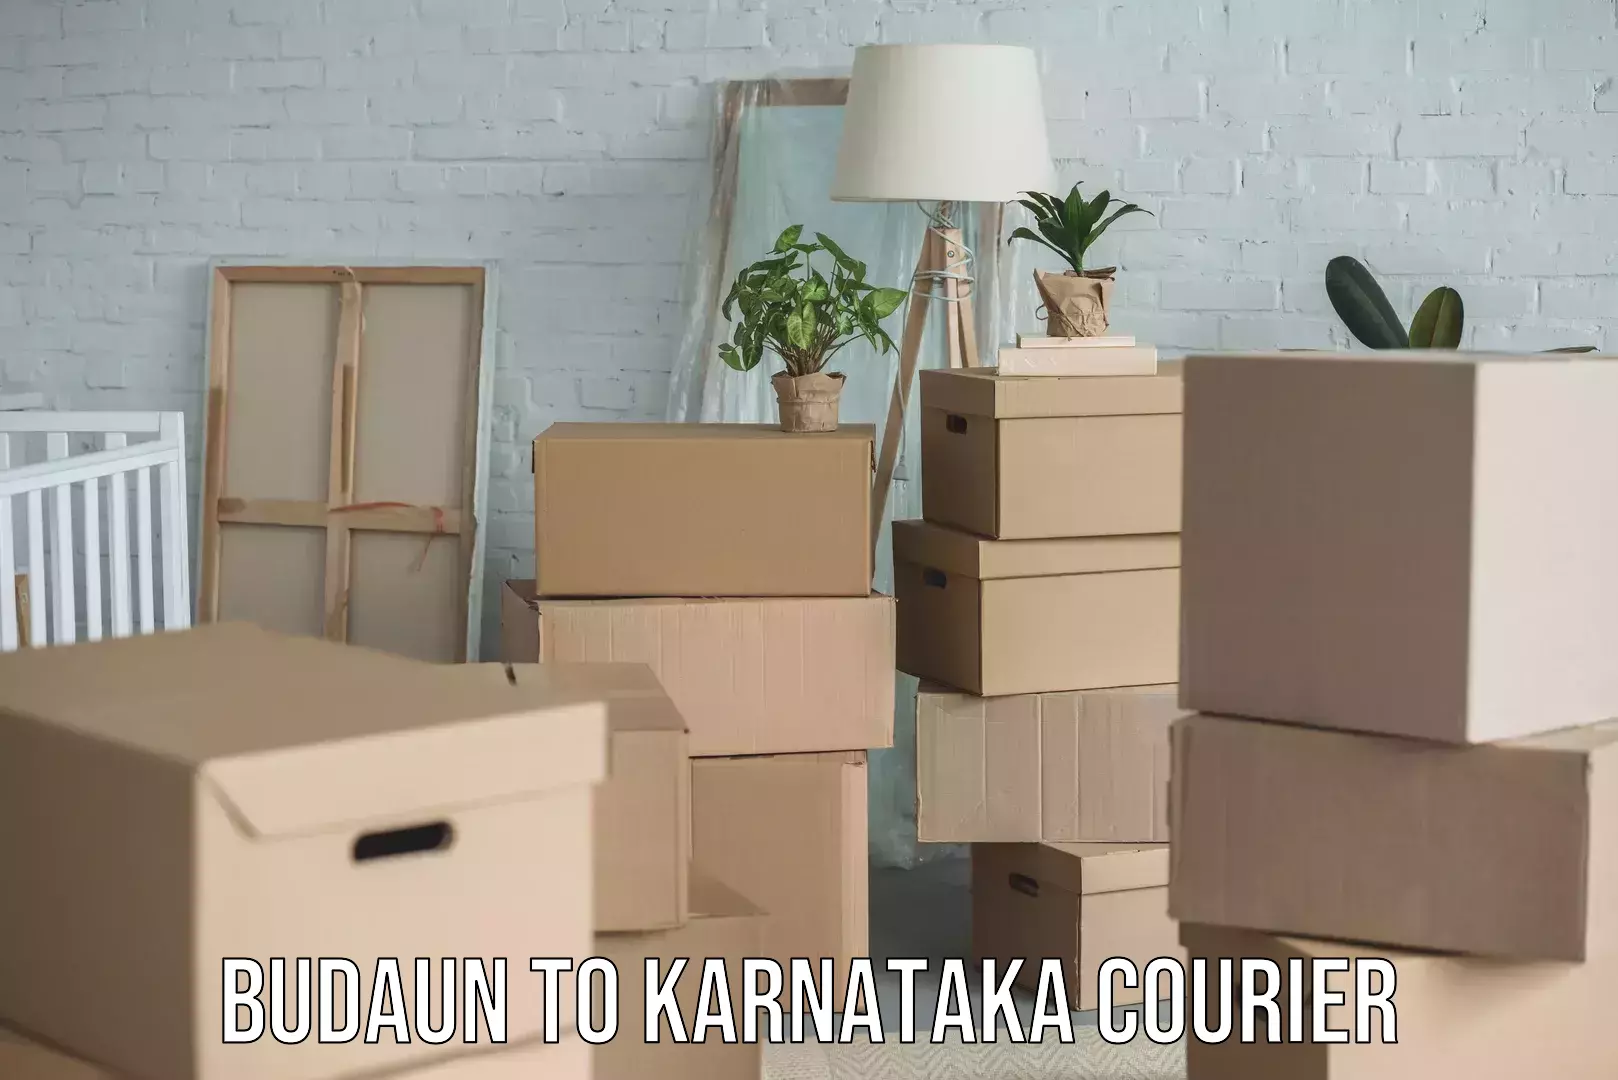 Global logistics network Budaun to Karnataka